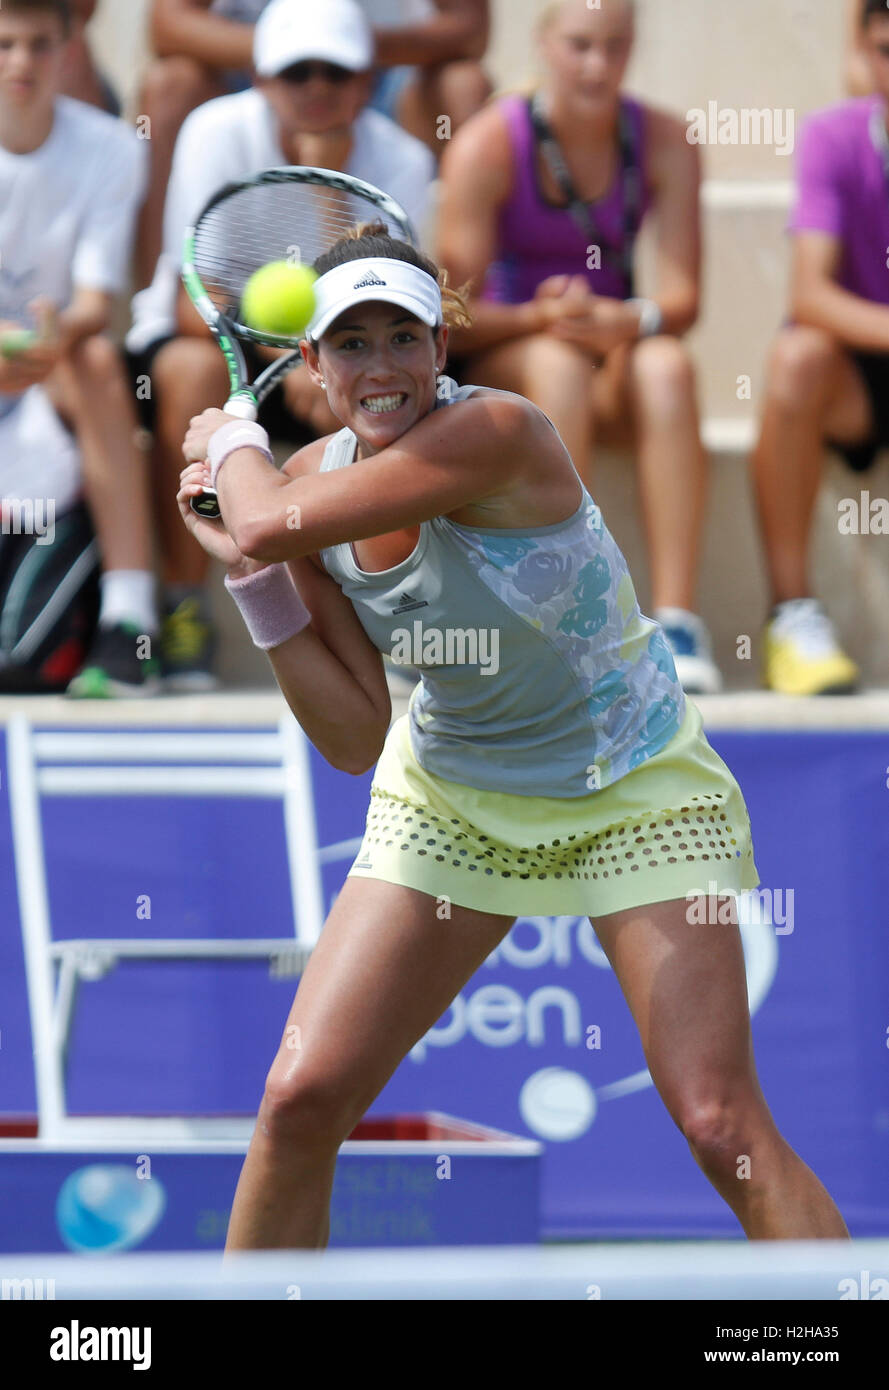 Garbine Muguruza top tennis player playing in the Mallorca Open, in the